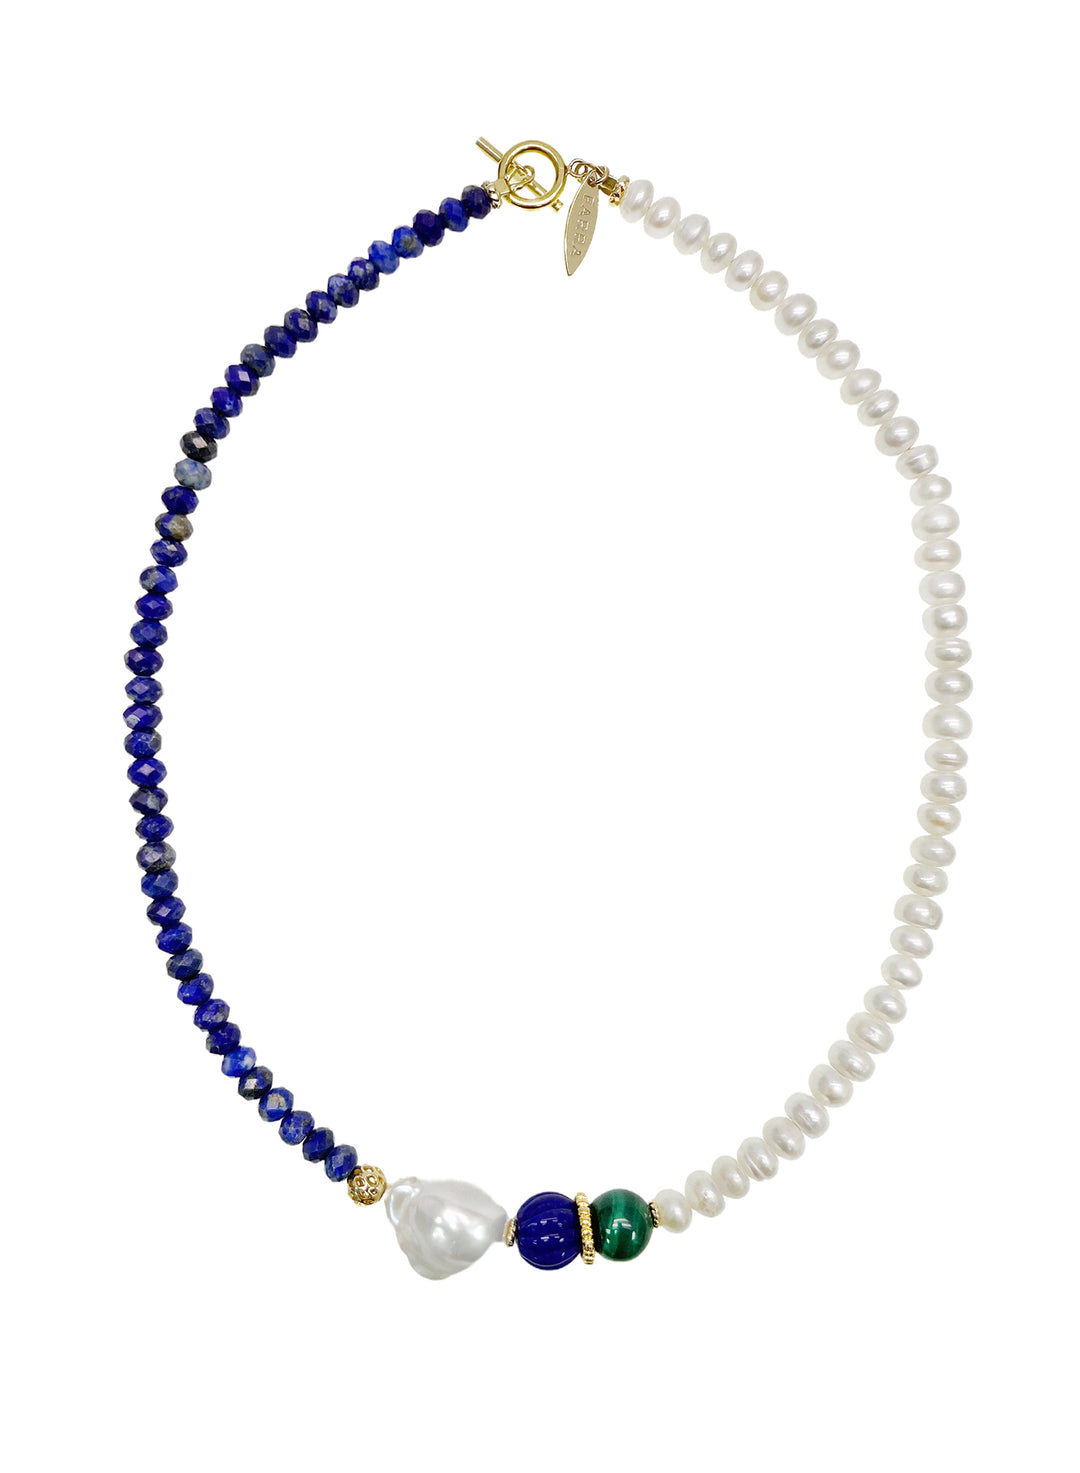 Blue Lapis Lazuli and Baroque Pearl Statement Necklace/ Choker LN028 - FARRA